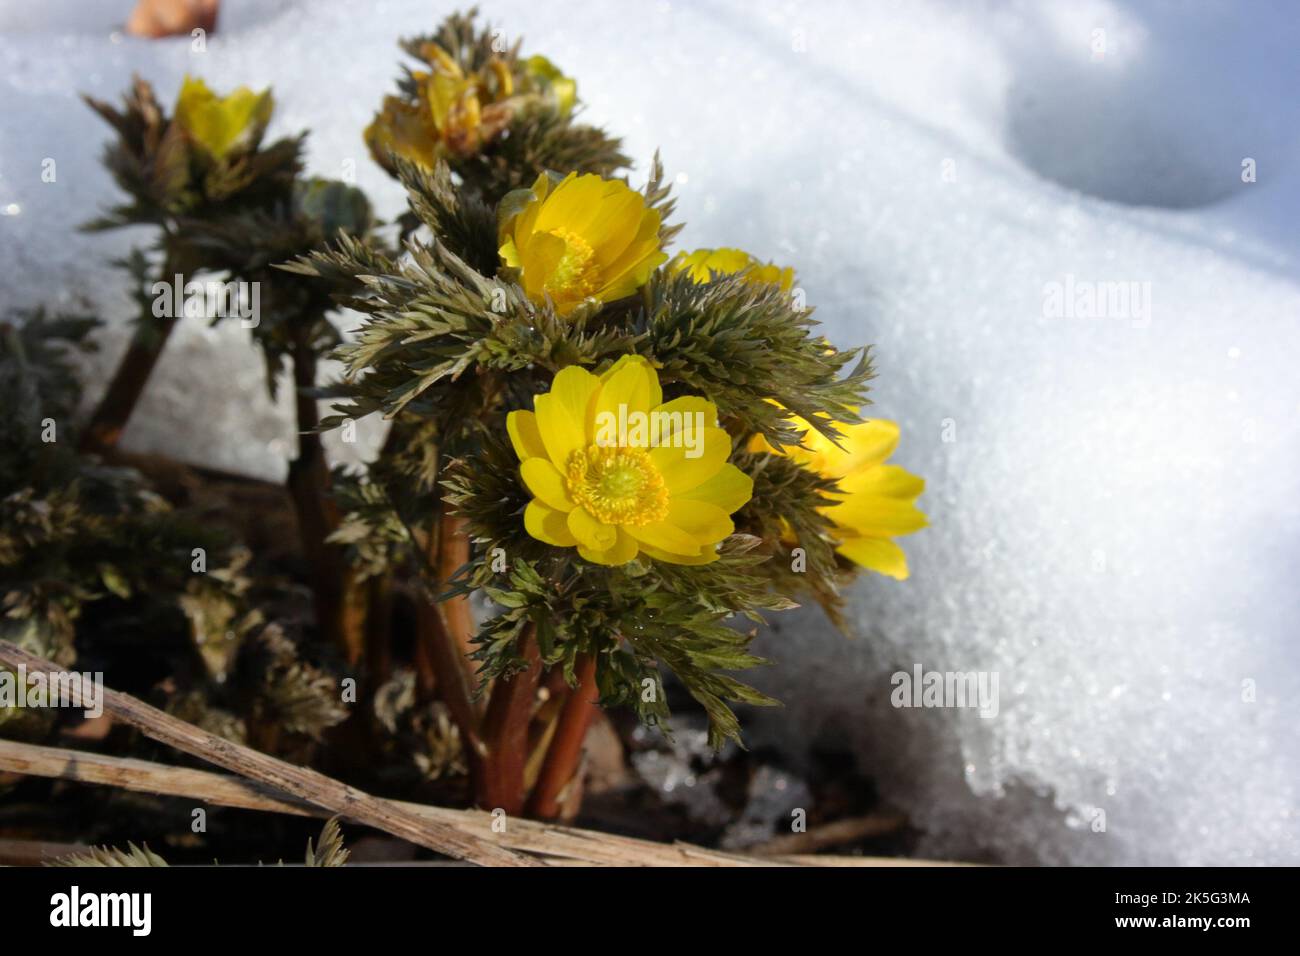 Amur adonis(Adonis amurensis) in snow. Stock Photo